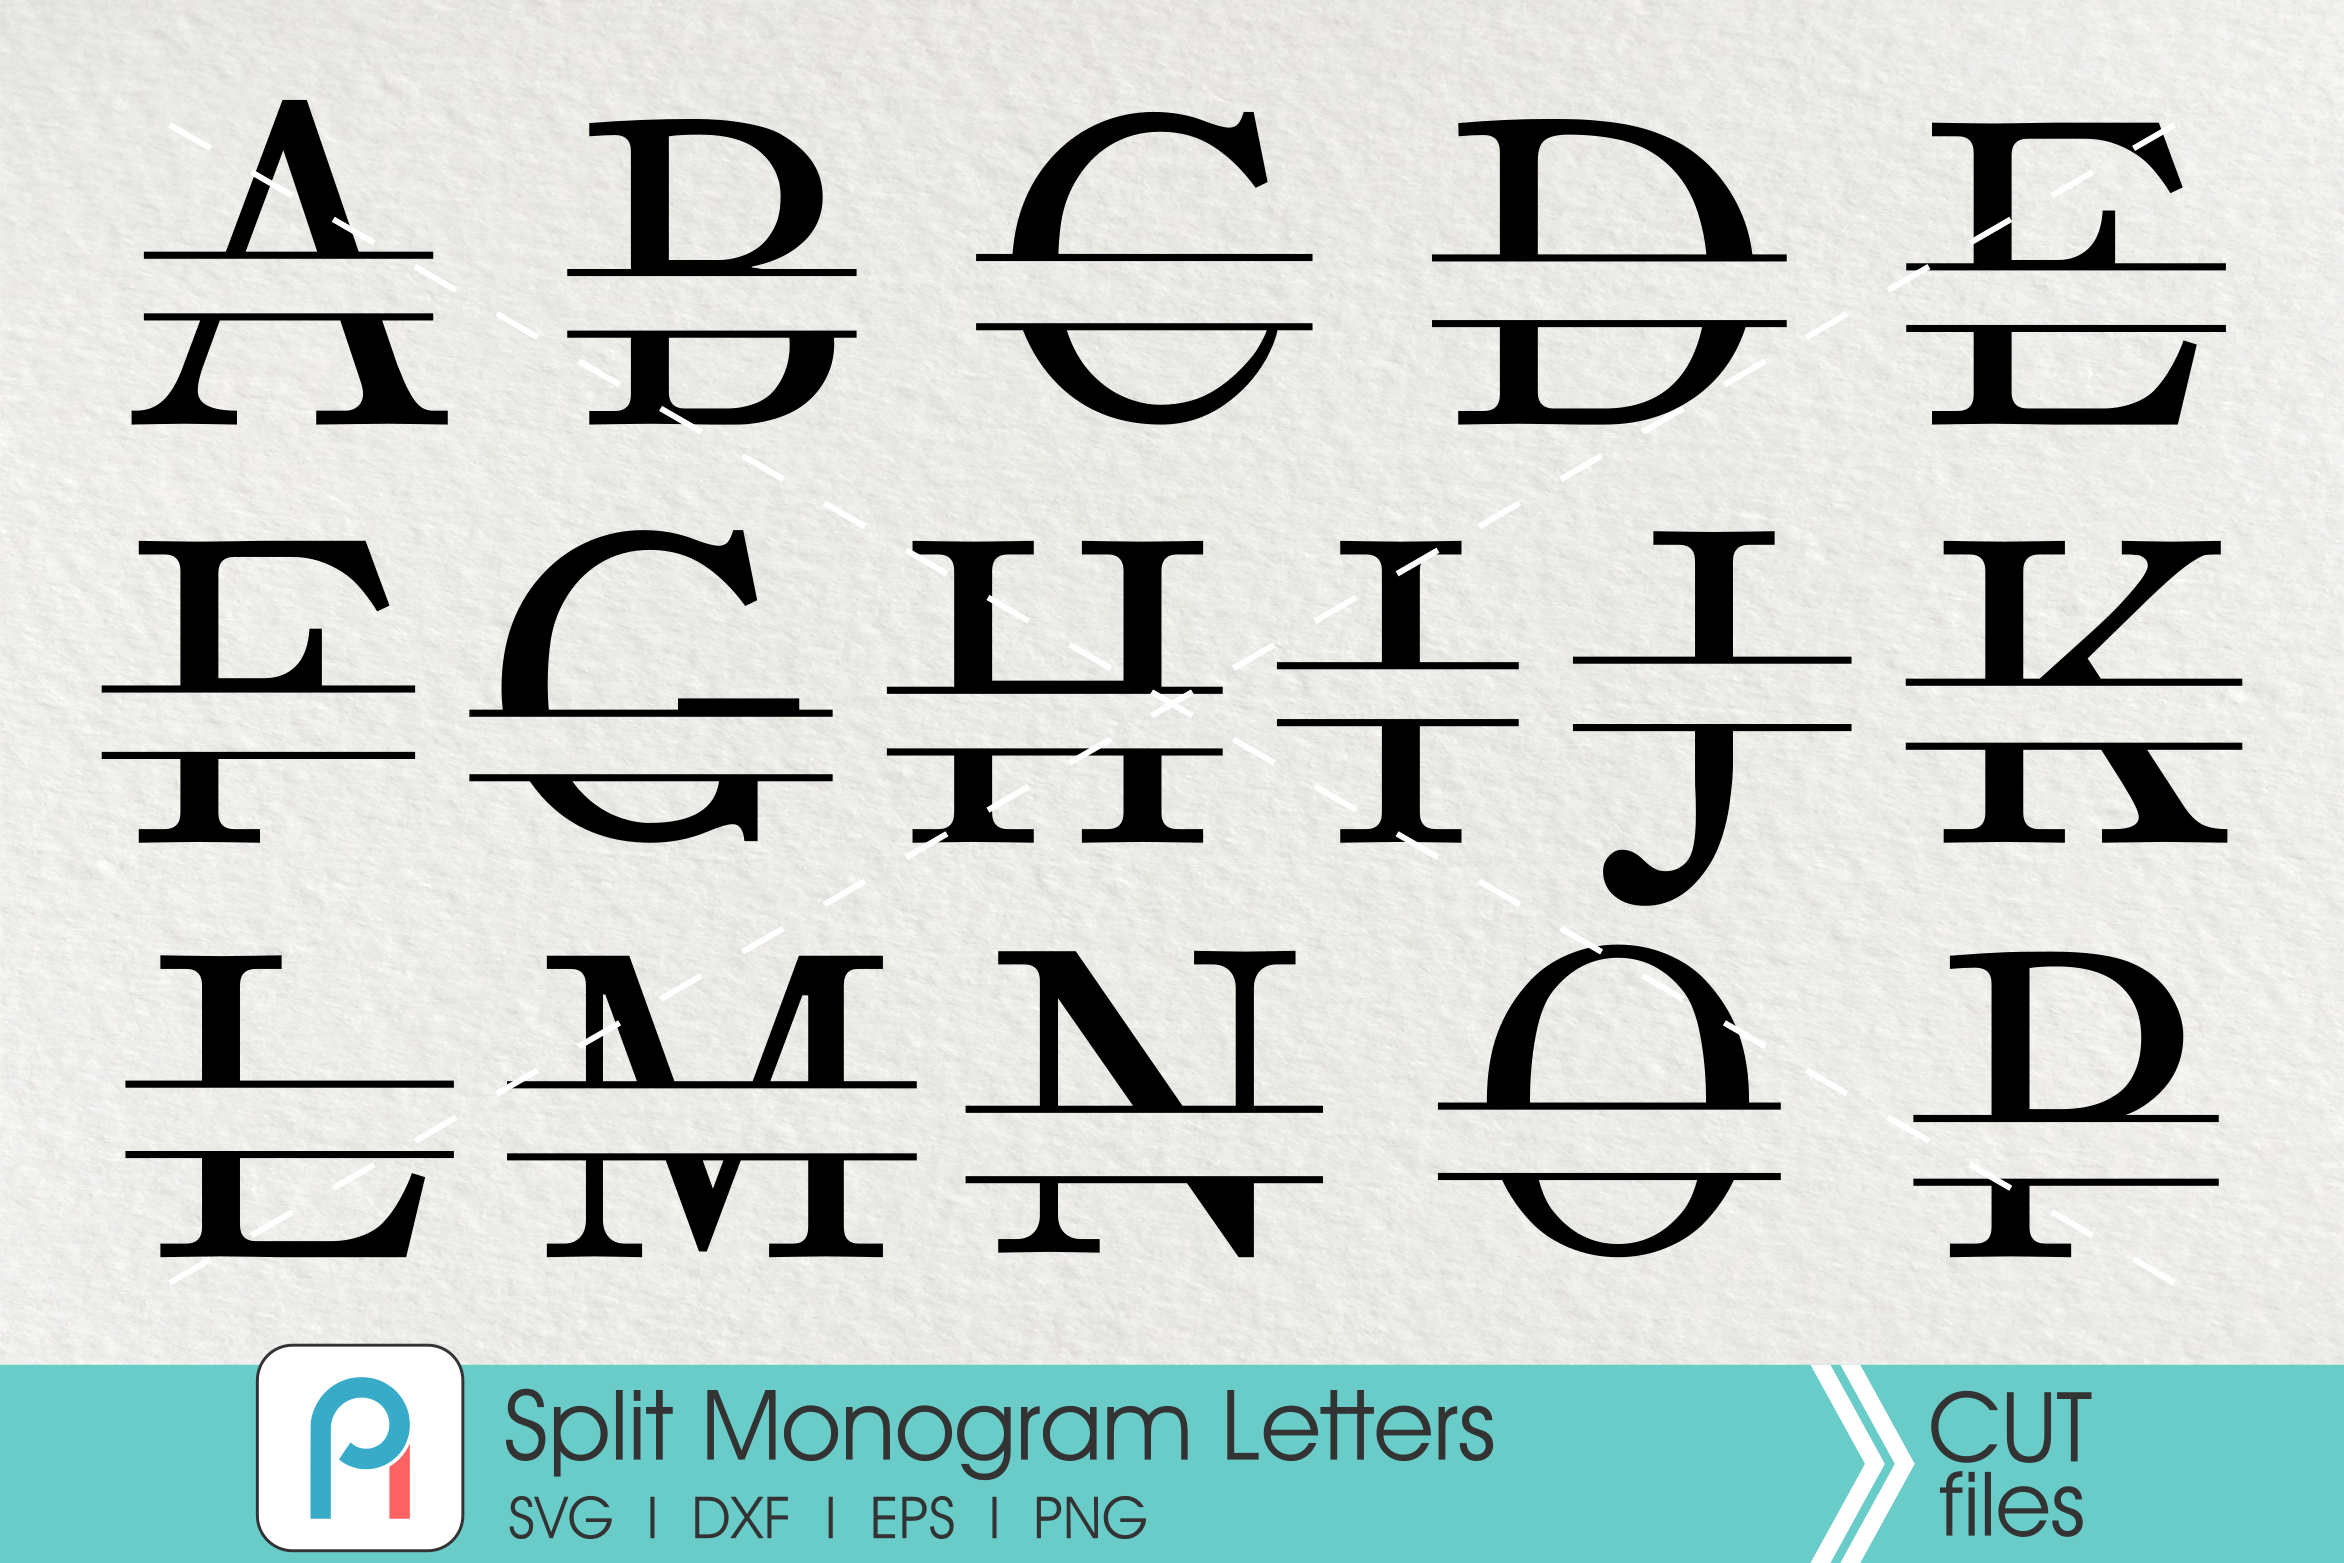 Split Letter Monogram Svg, Aplhabet Monogram Svg, Letter ...